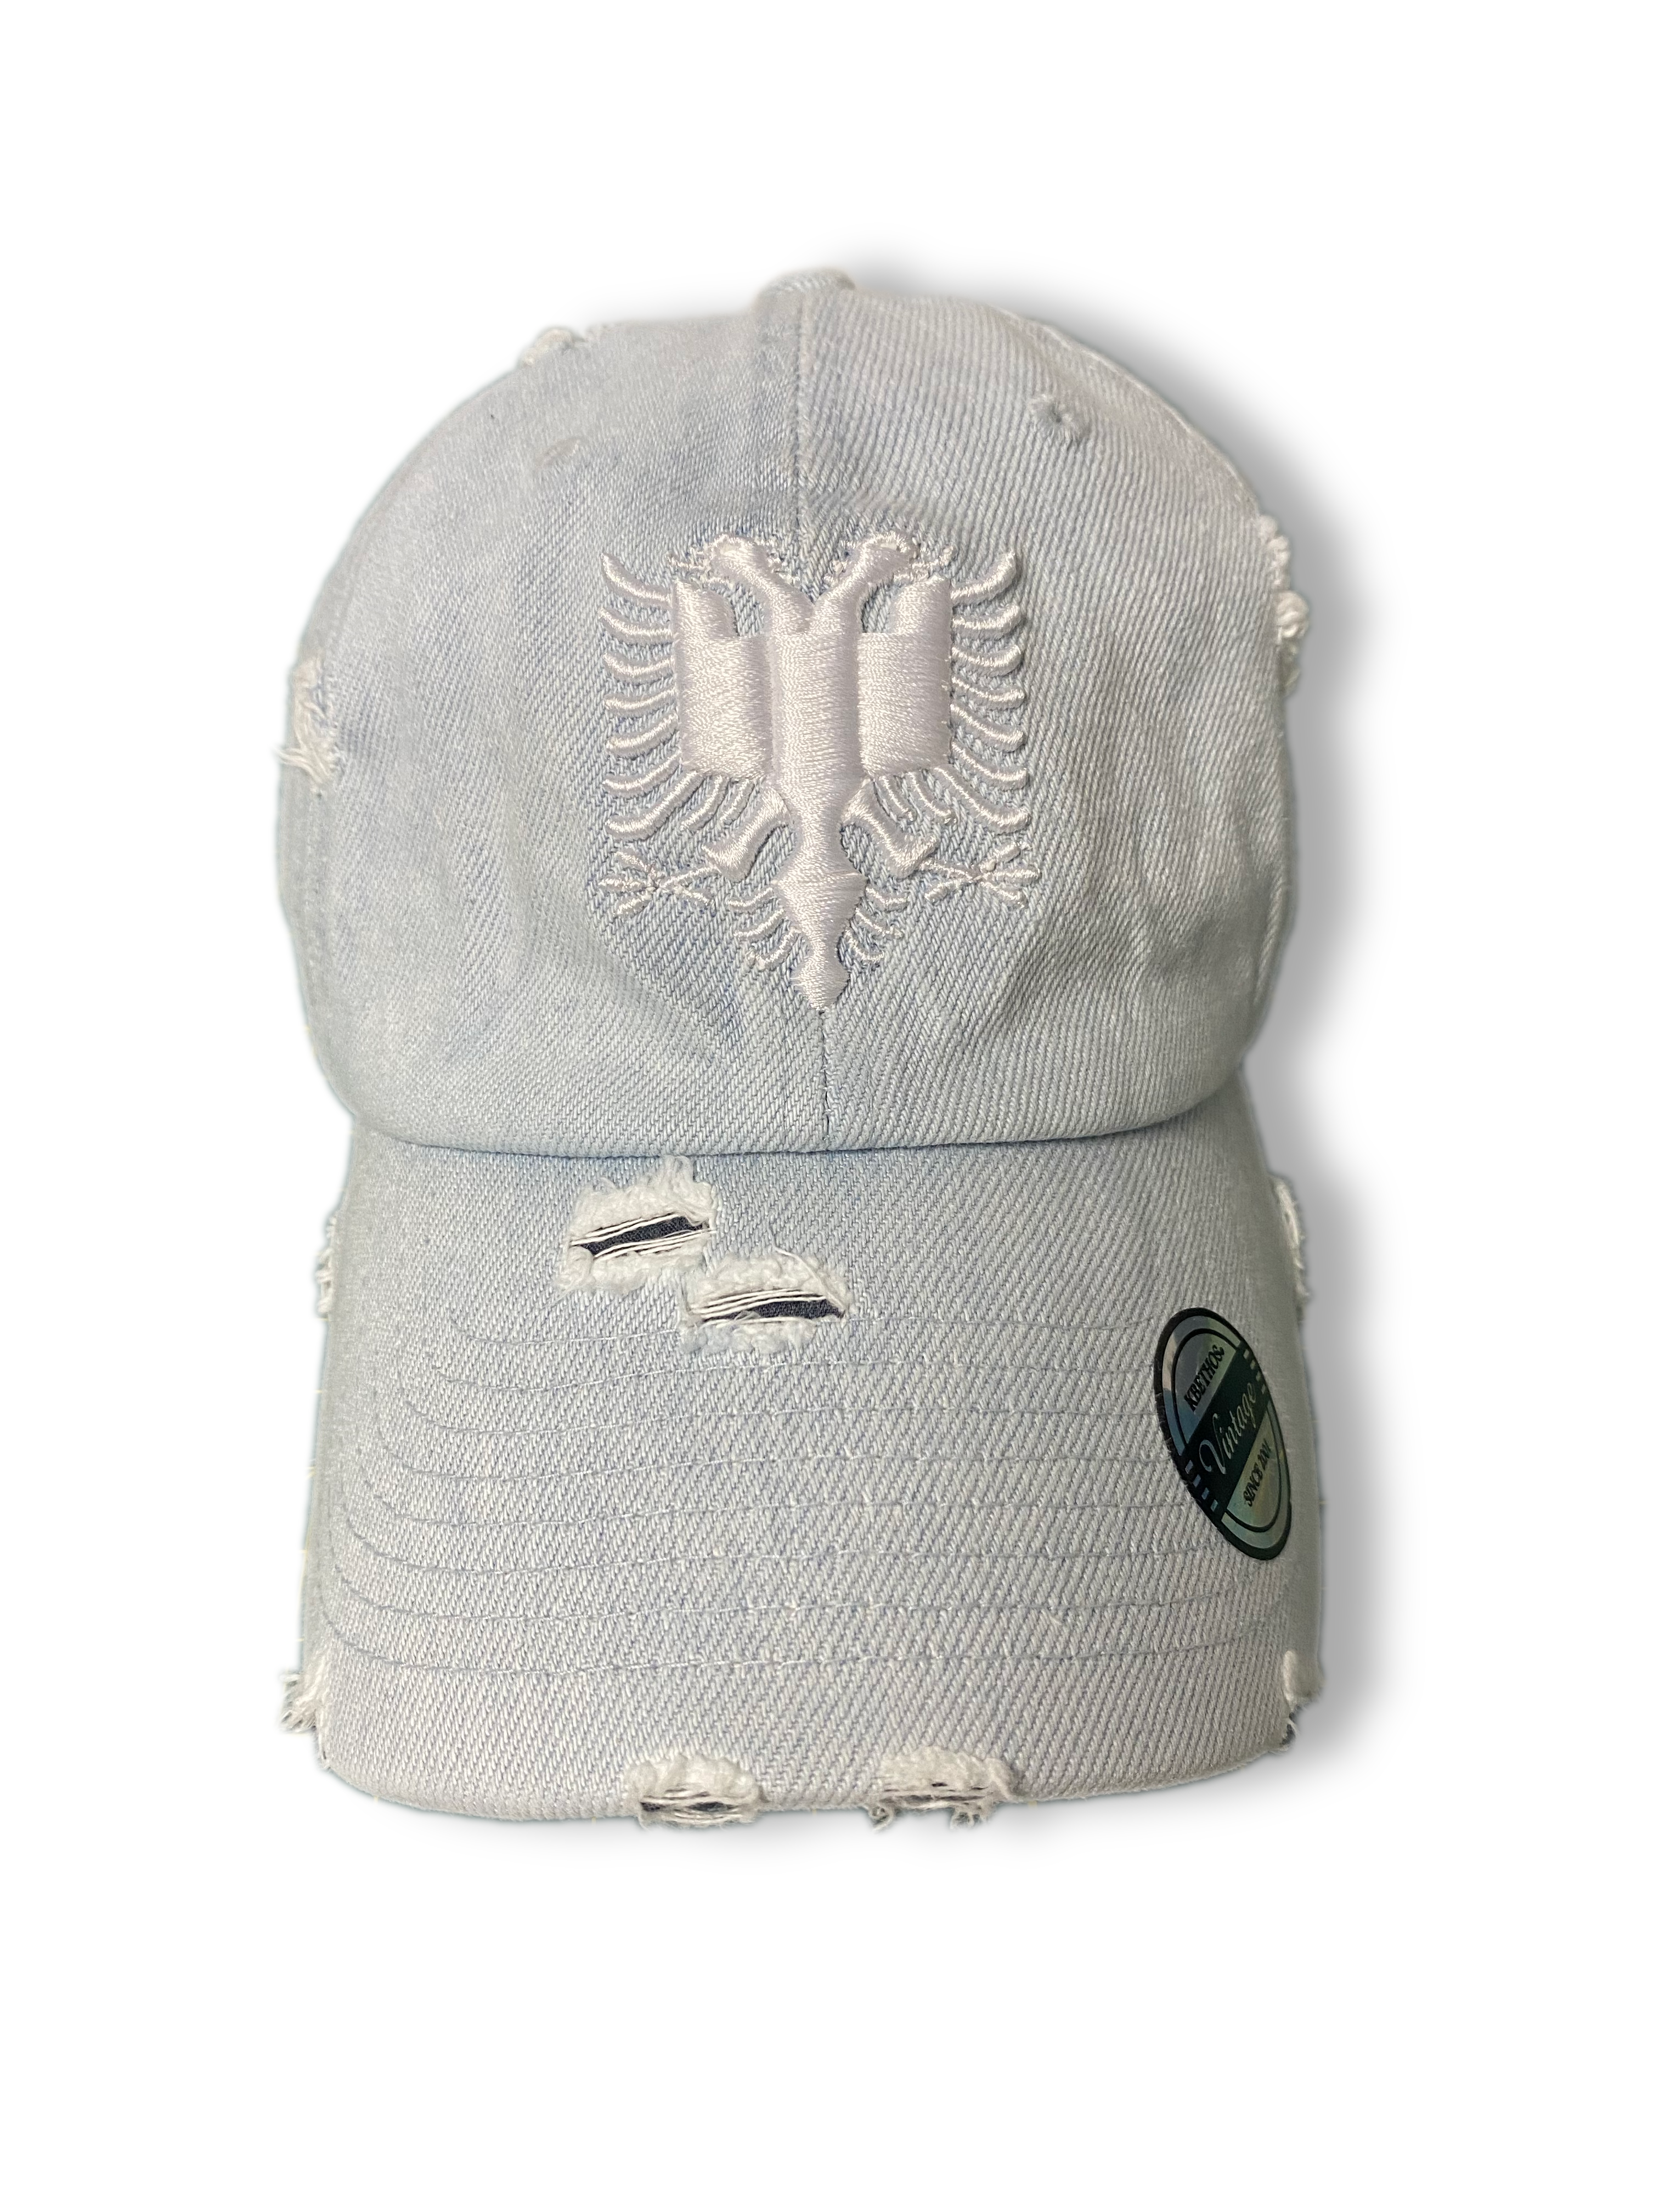 Albanian Eagle Dad Hat